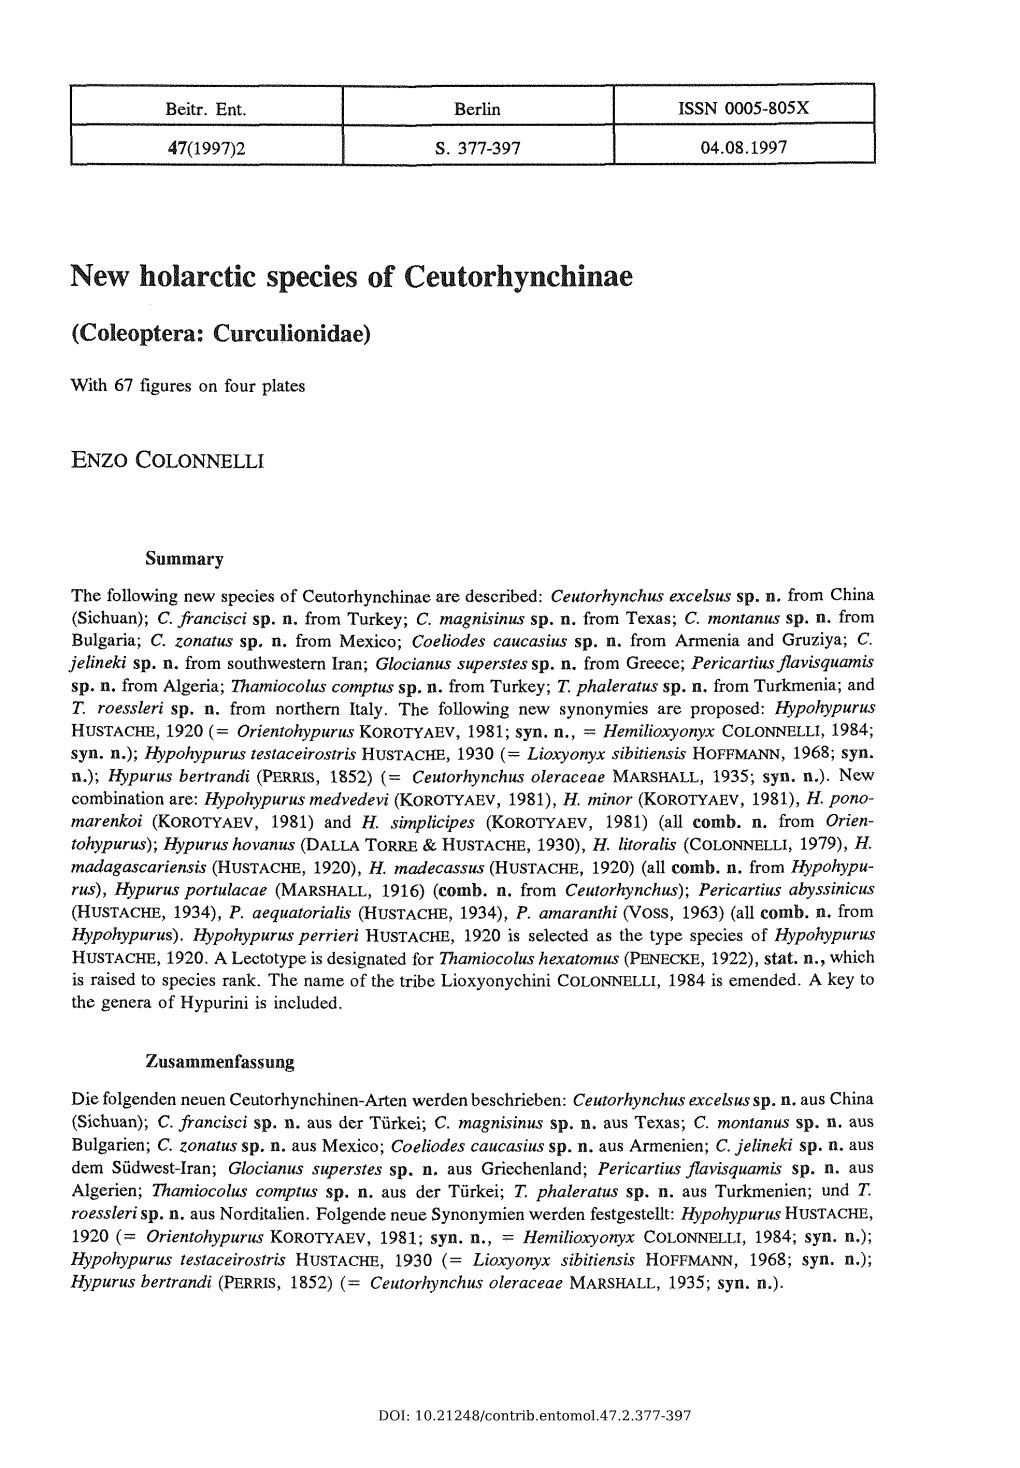 New Holarctic Species of Ceutorhynchlnae